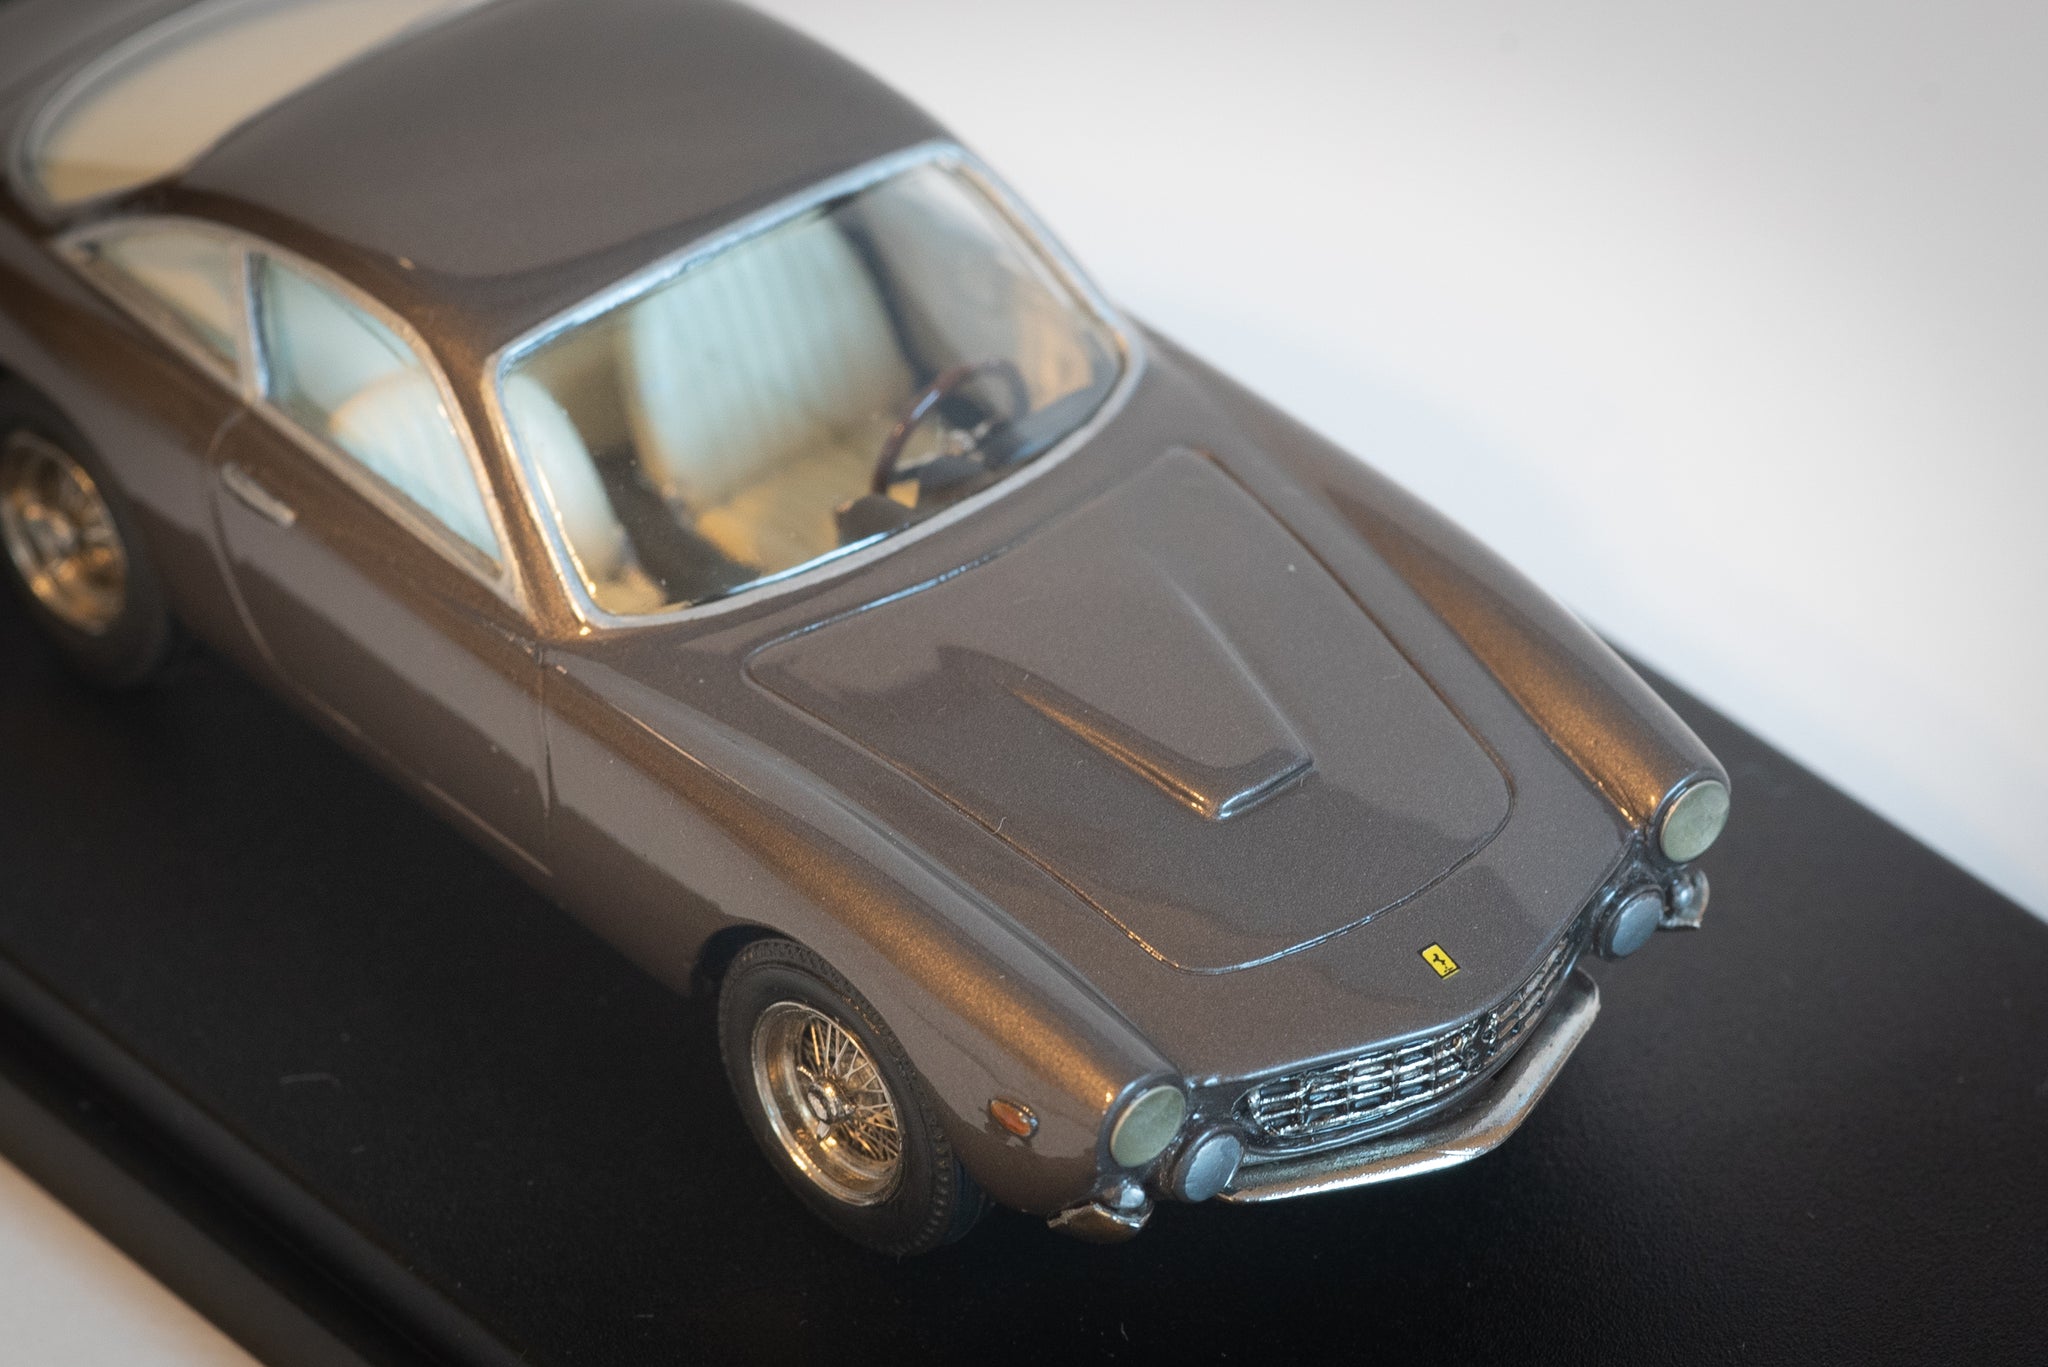 Precision Miniatures - McQueen's Ferrari 250 GT Lusso 1/43 scale